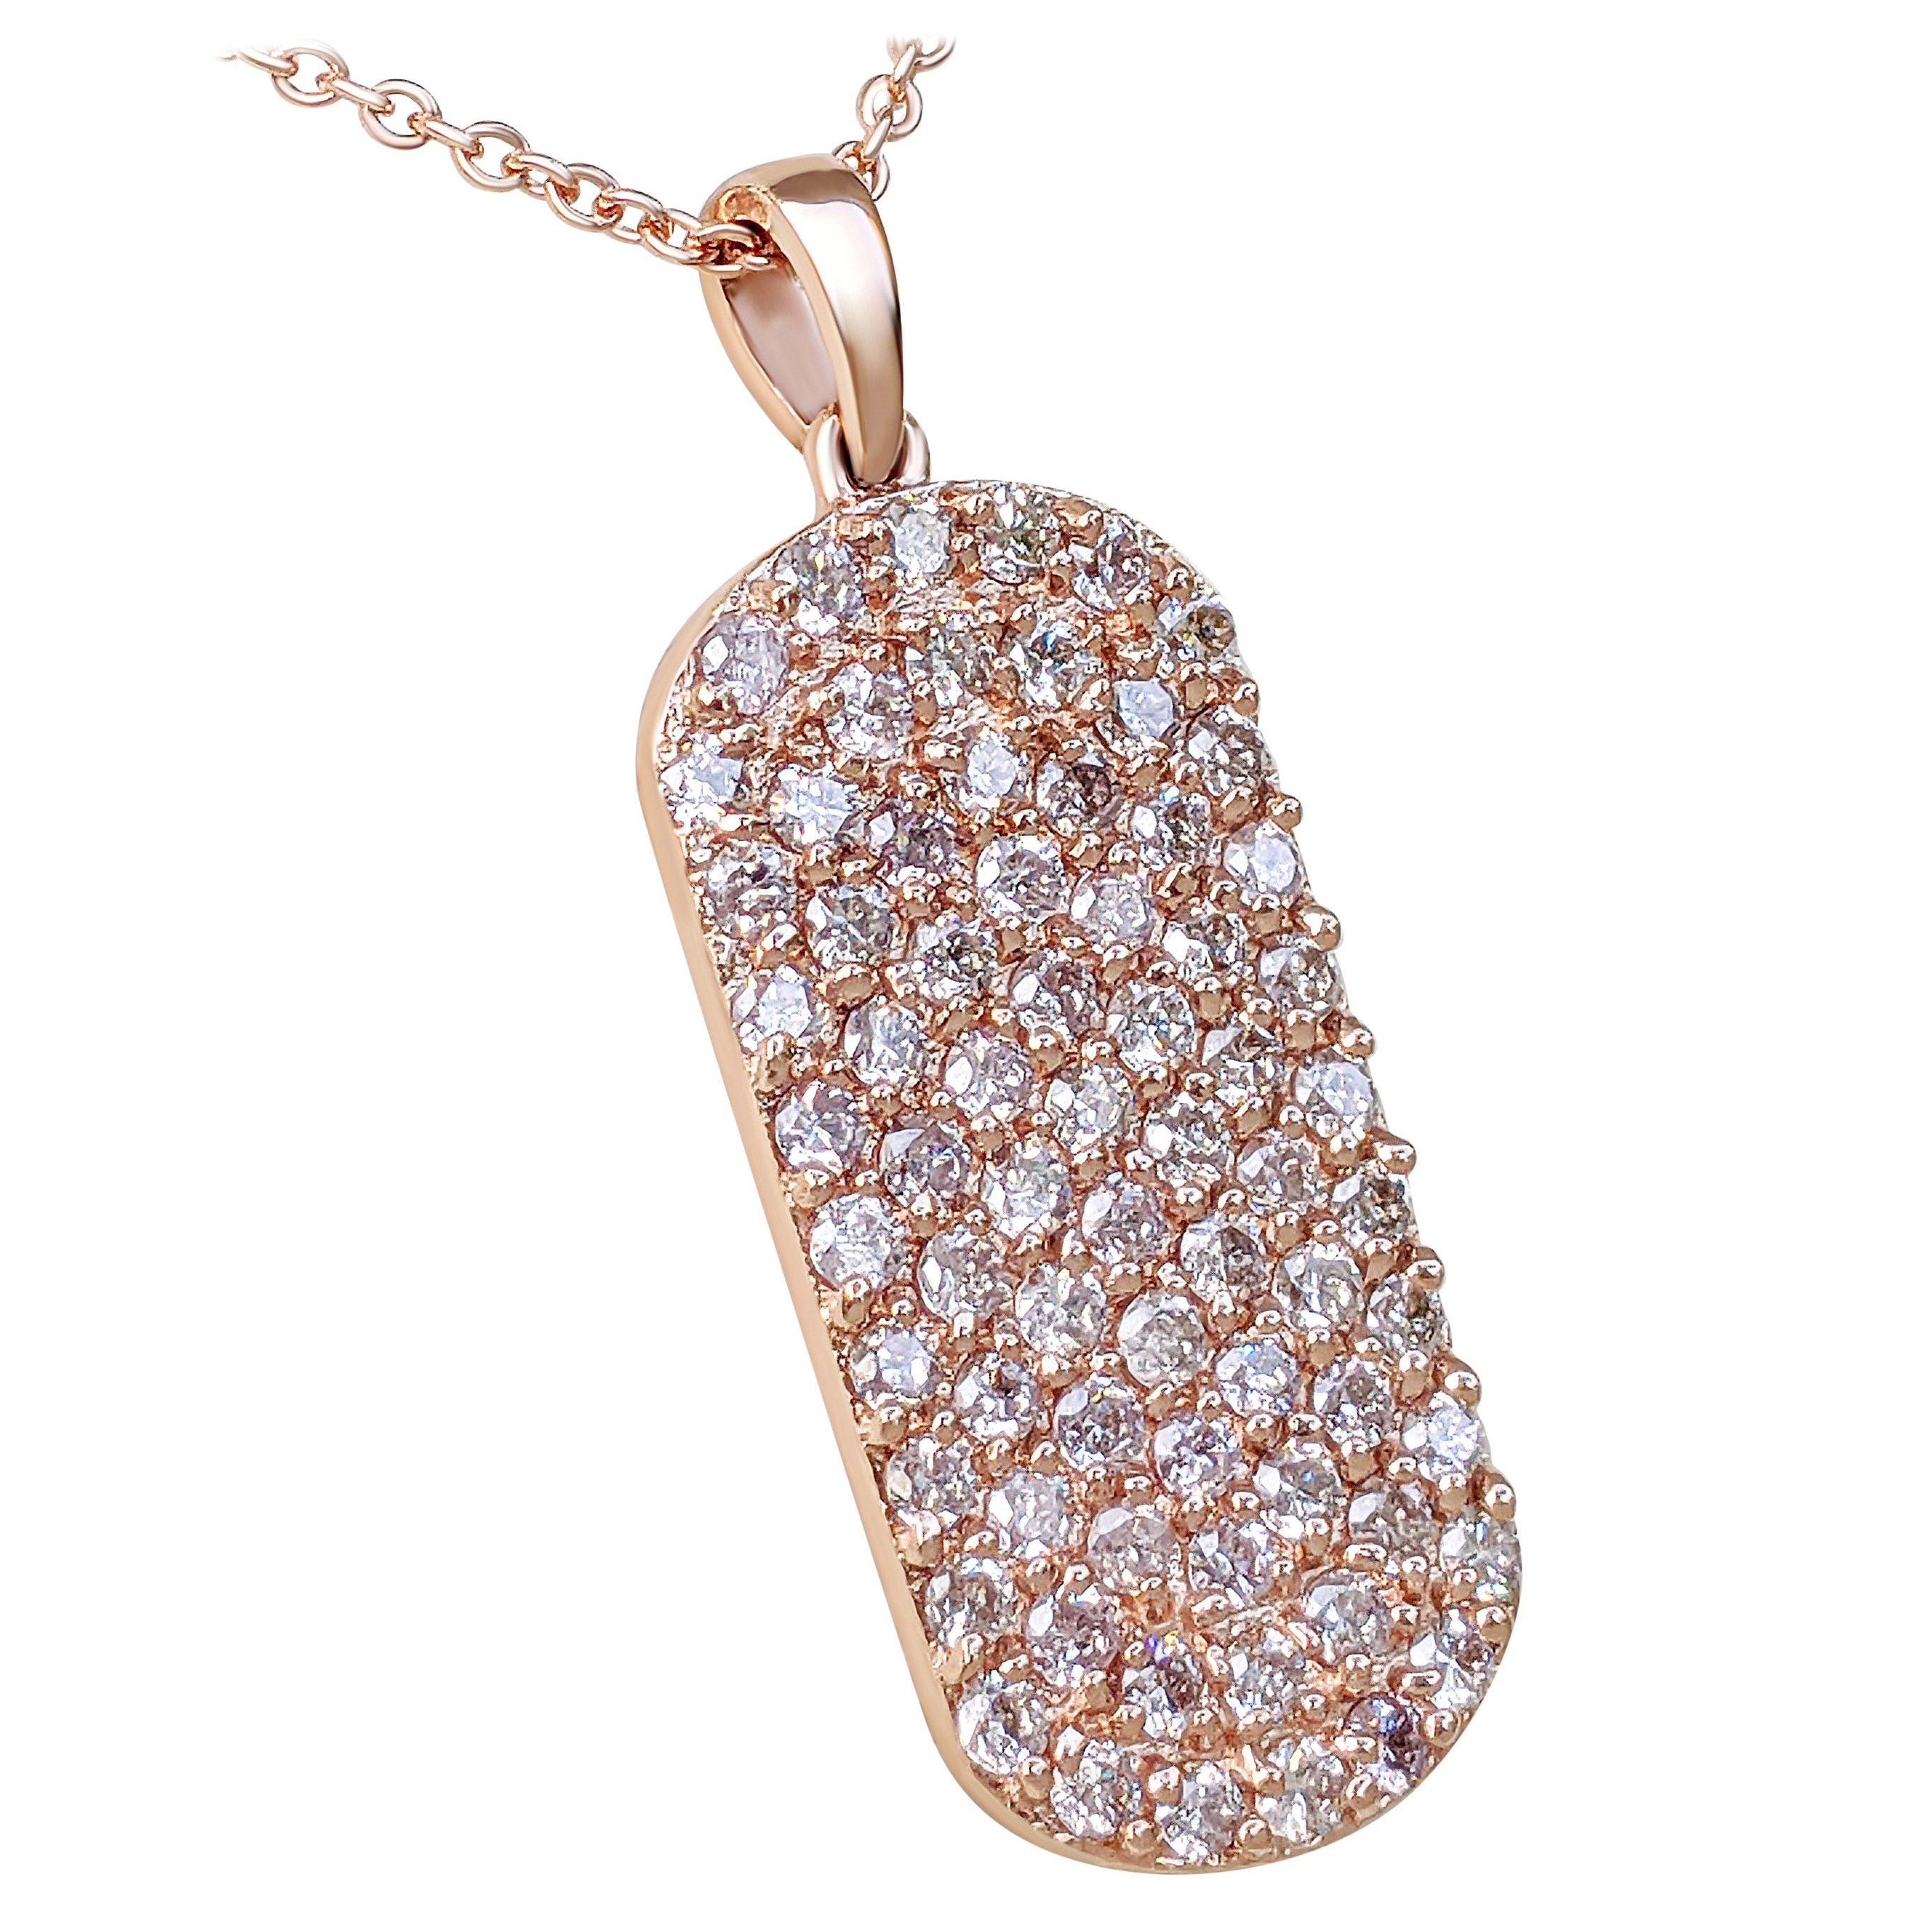 NO RESERVE! 1.10Ct Fancy Pink Diamond 14 kt. Gold Pendant Necklace For Sale